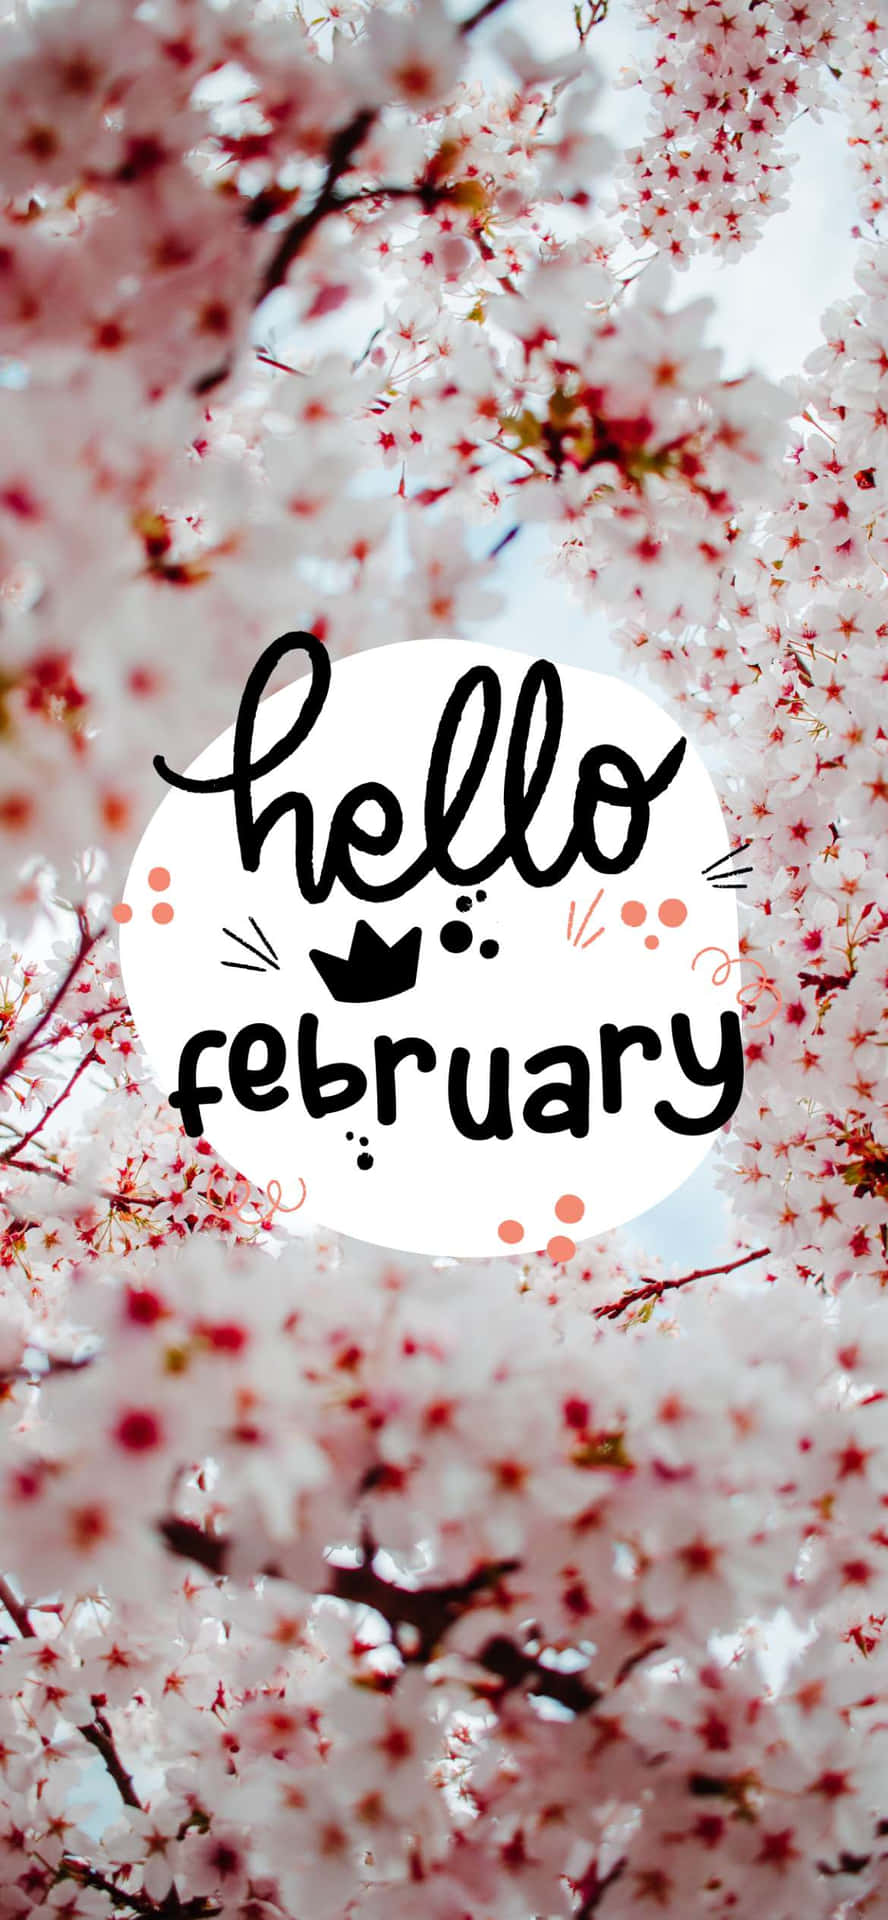 Hello February! Wallpaper